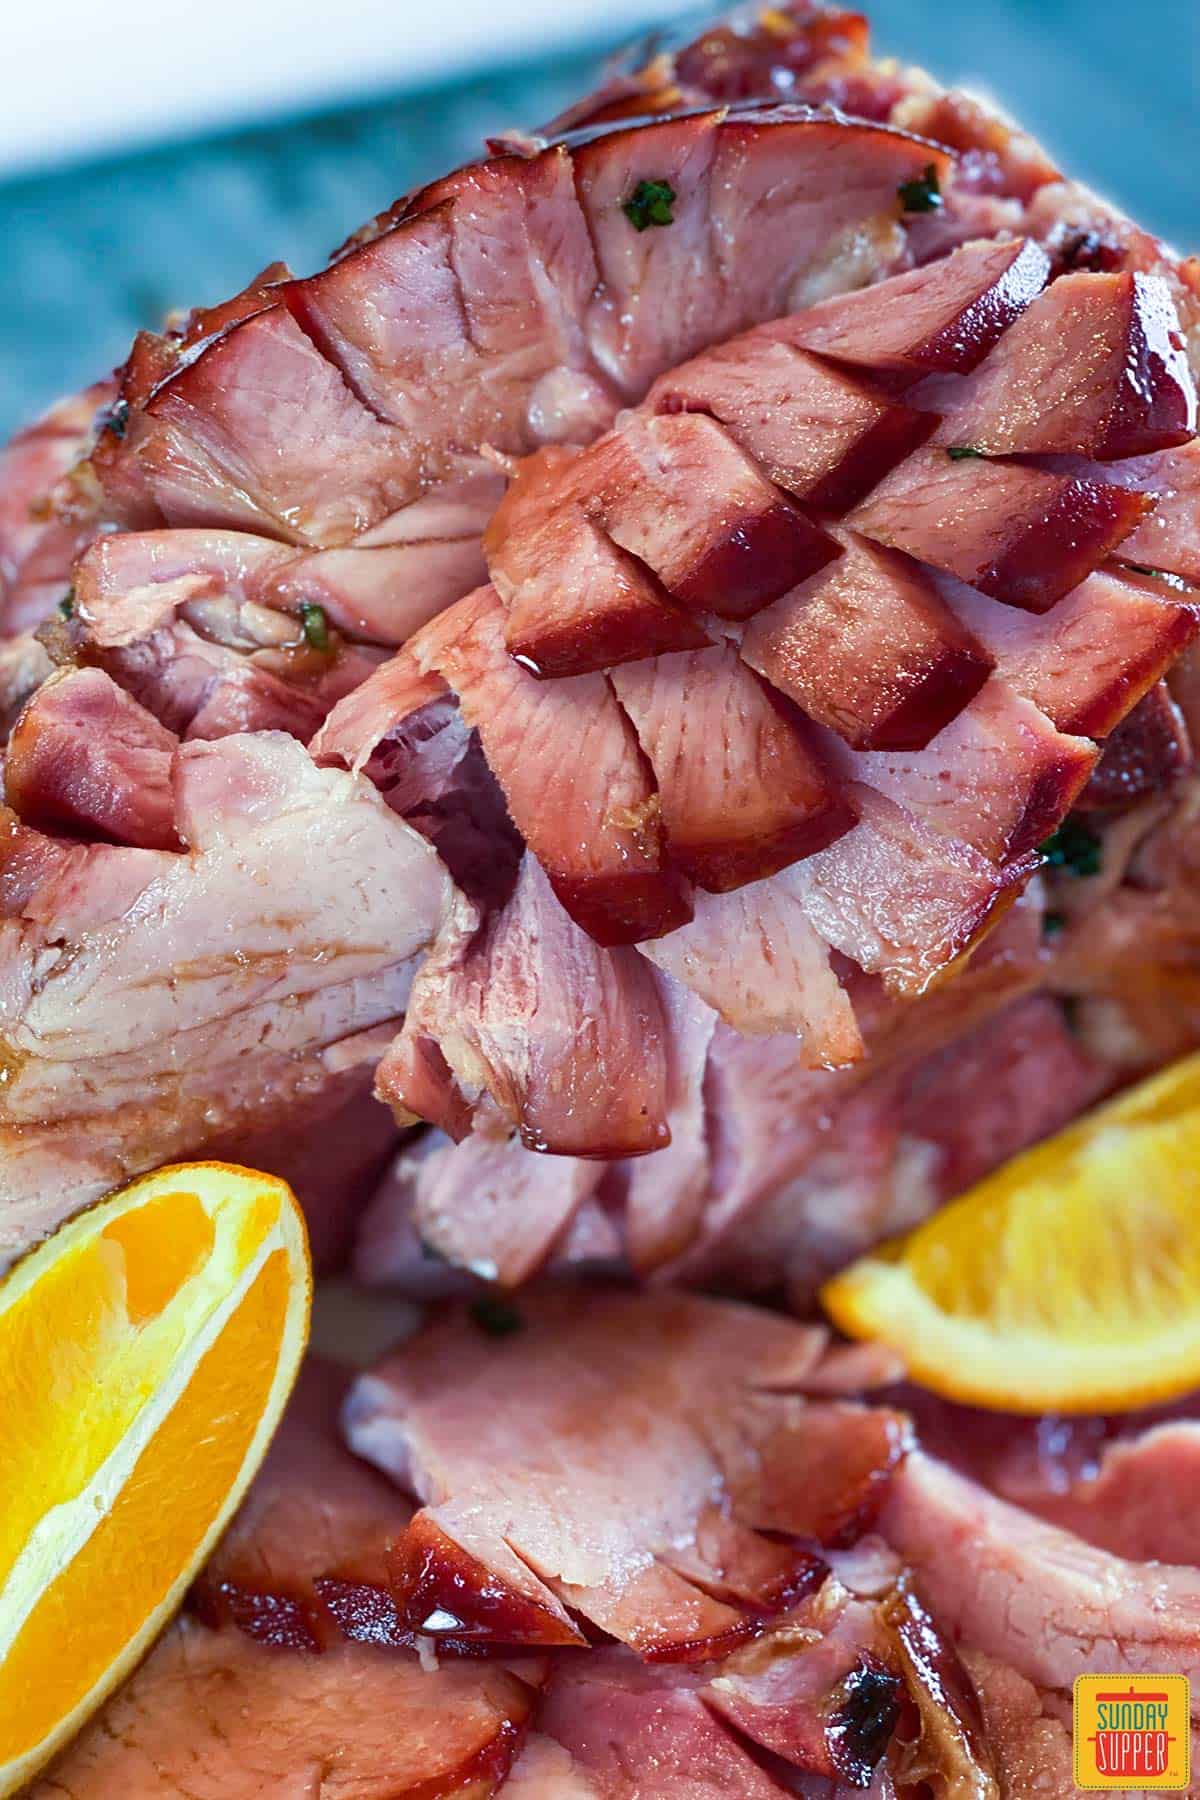 Slices of ham with orange wedges